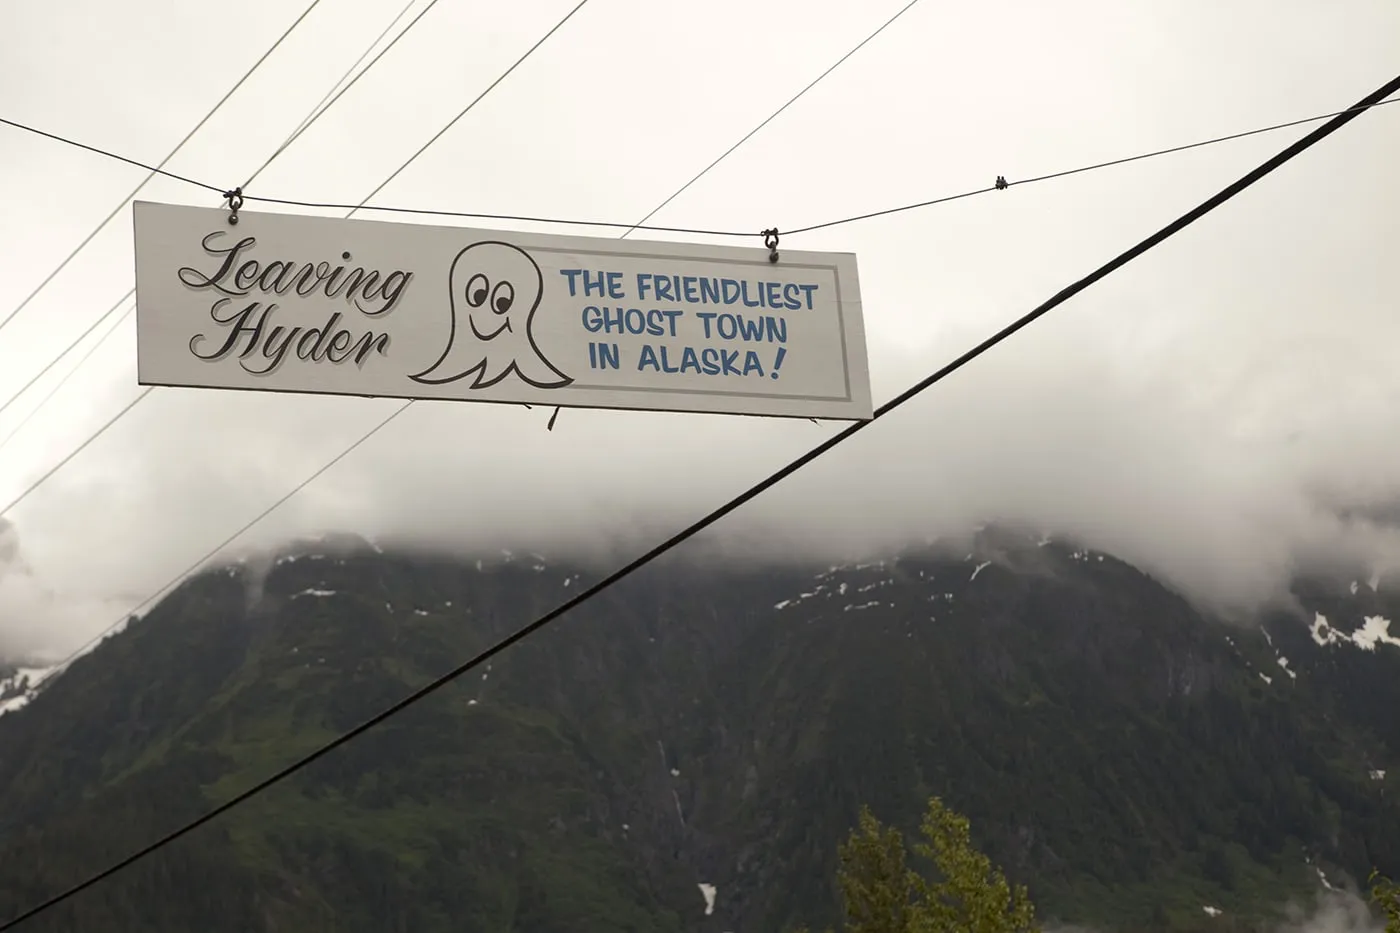 Leaving Hyder, the friendliest ghost town in Alaska! A sign in Hyder, Alaska.